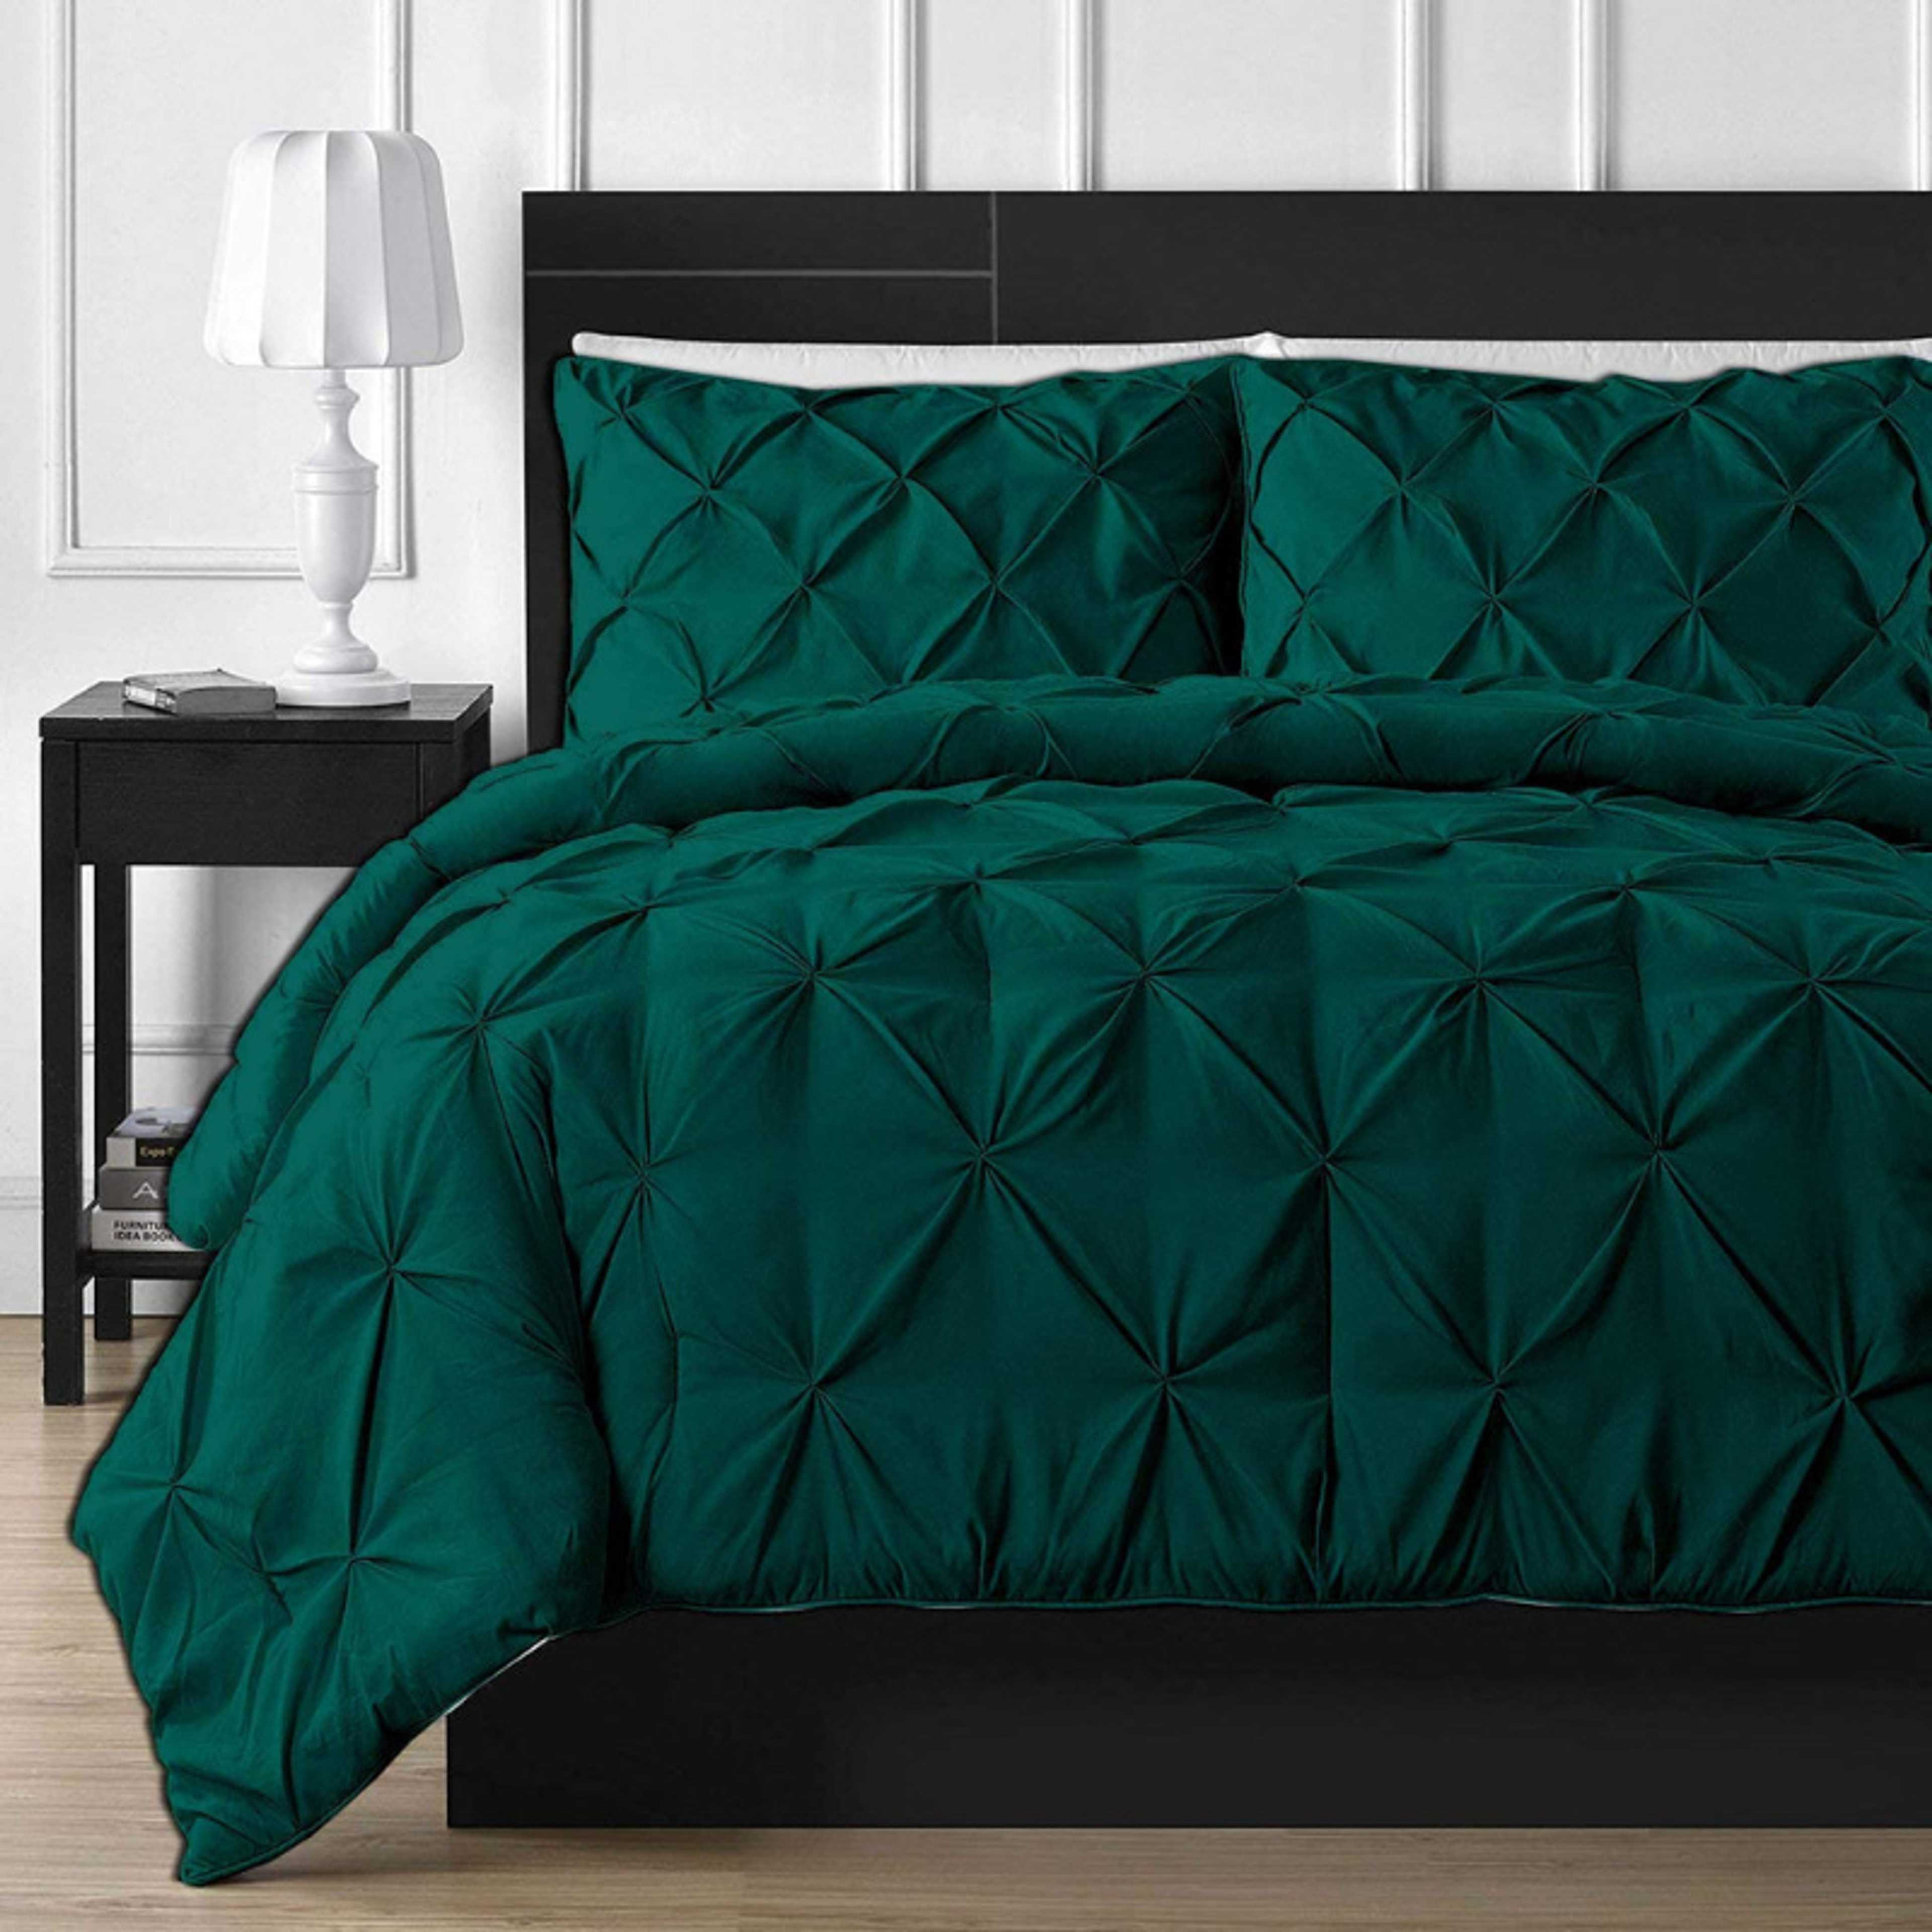 Deluxe Emerald green Pintuck Duvet Covers Set - 8 Pieces